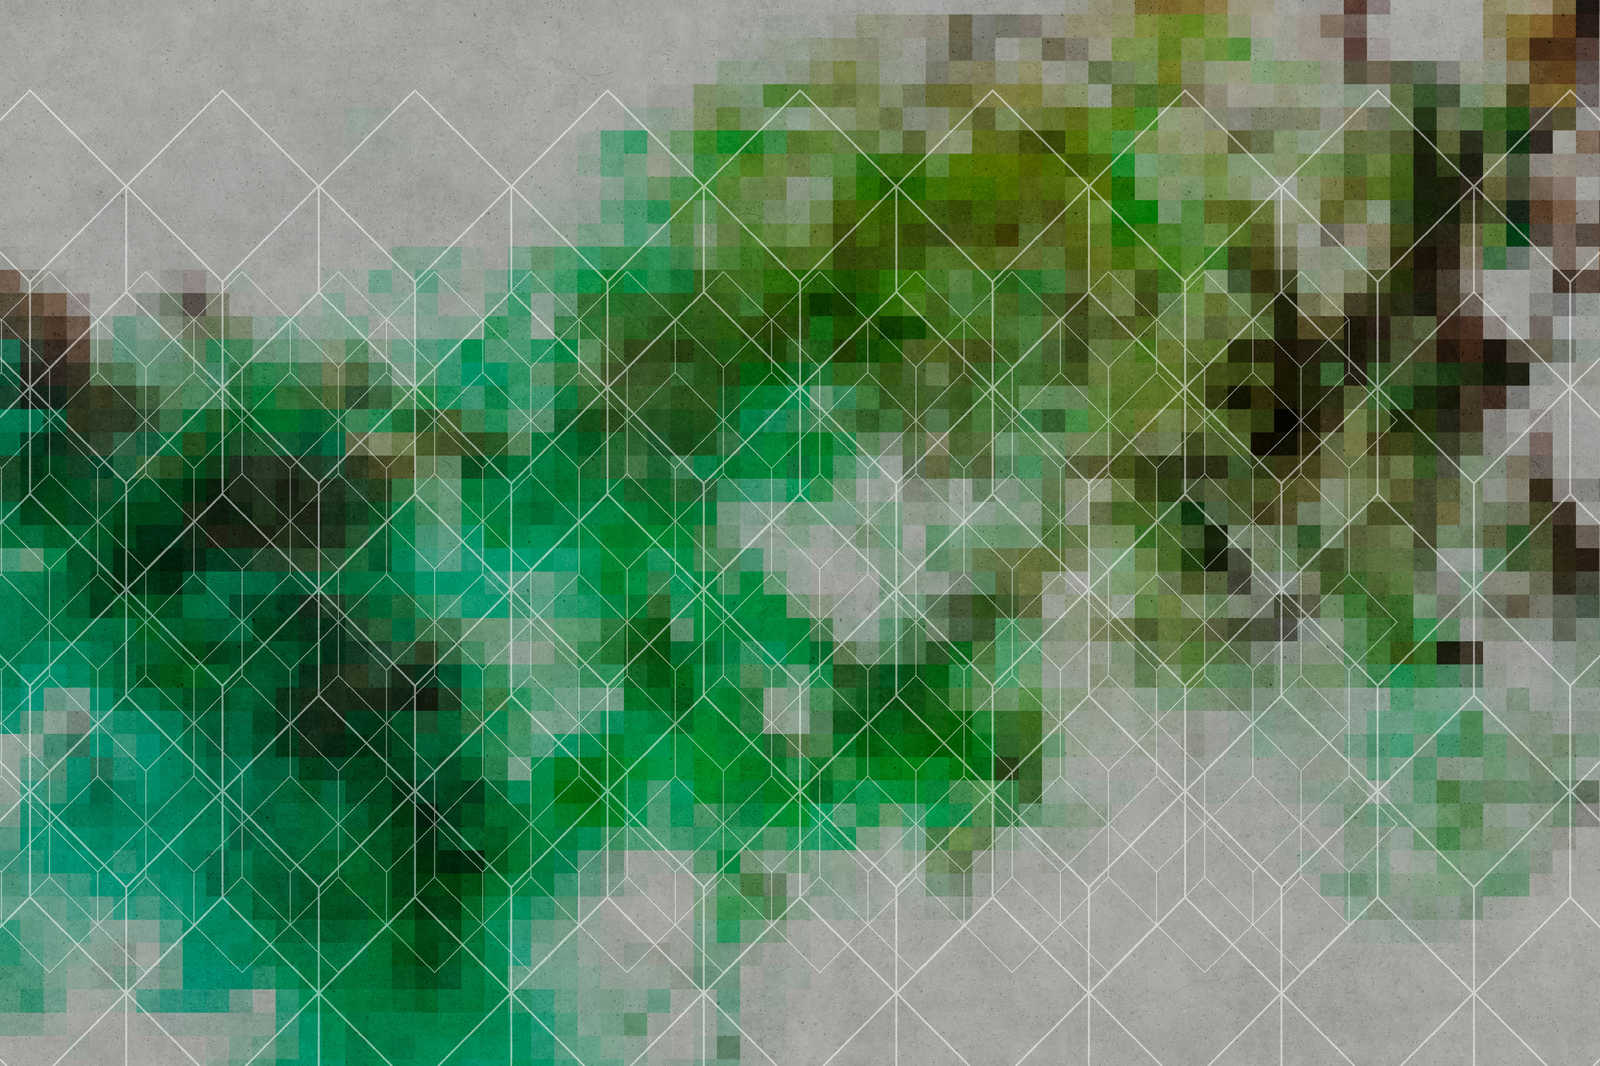             Leinwandbild Farbe-Wolken & Linienmuster | grün, grau – 0,90 m x 0,60 m
        